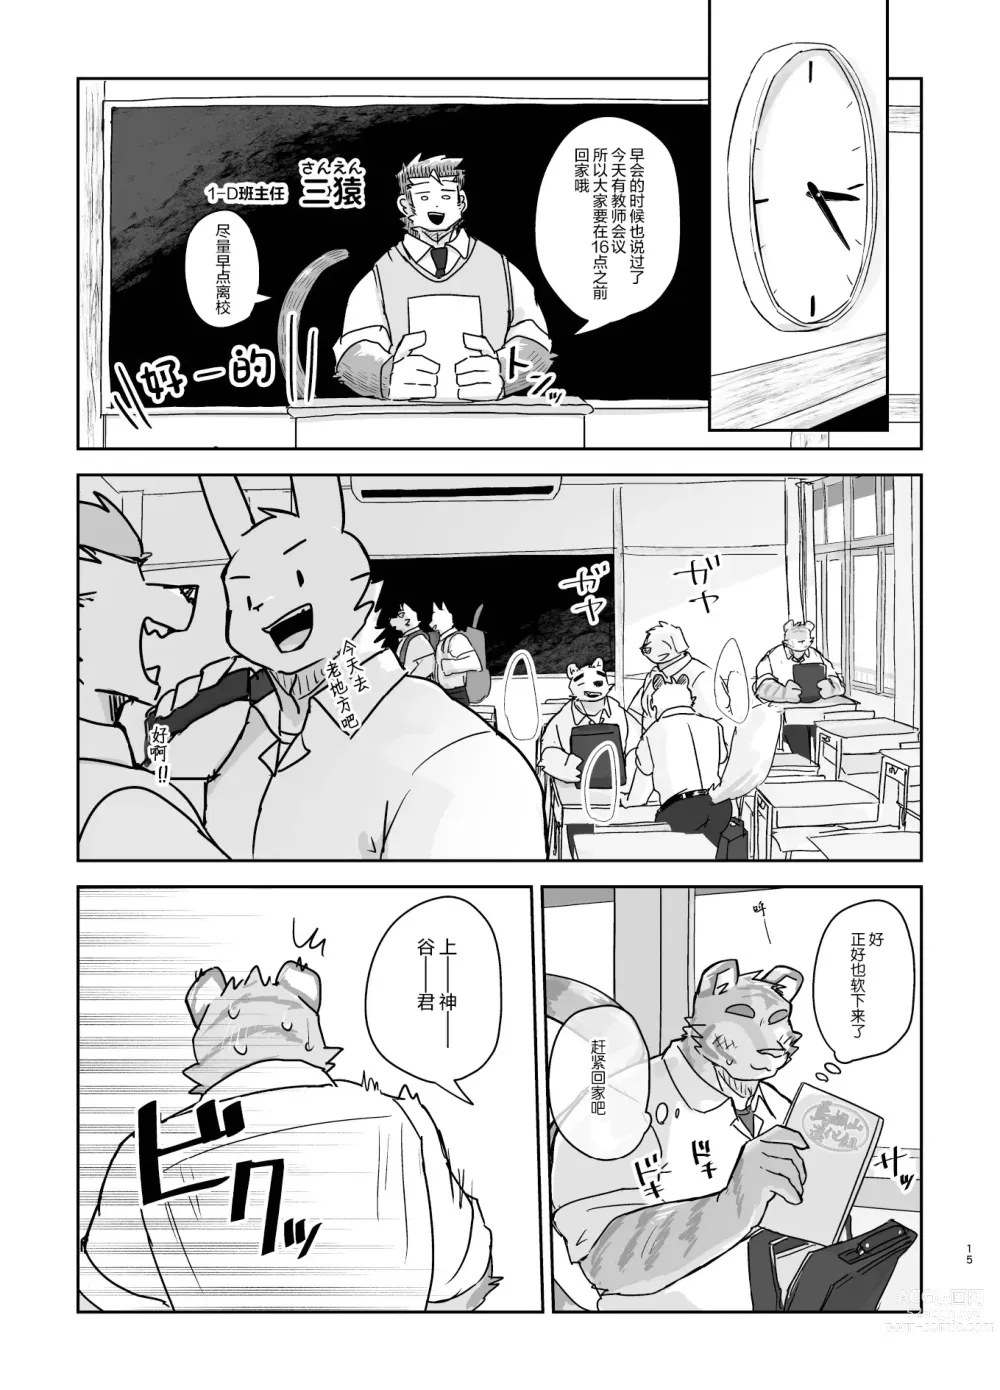 Page 15 of doujinshi 关于我在教室被榨精这件事